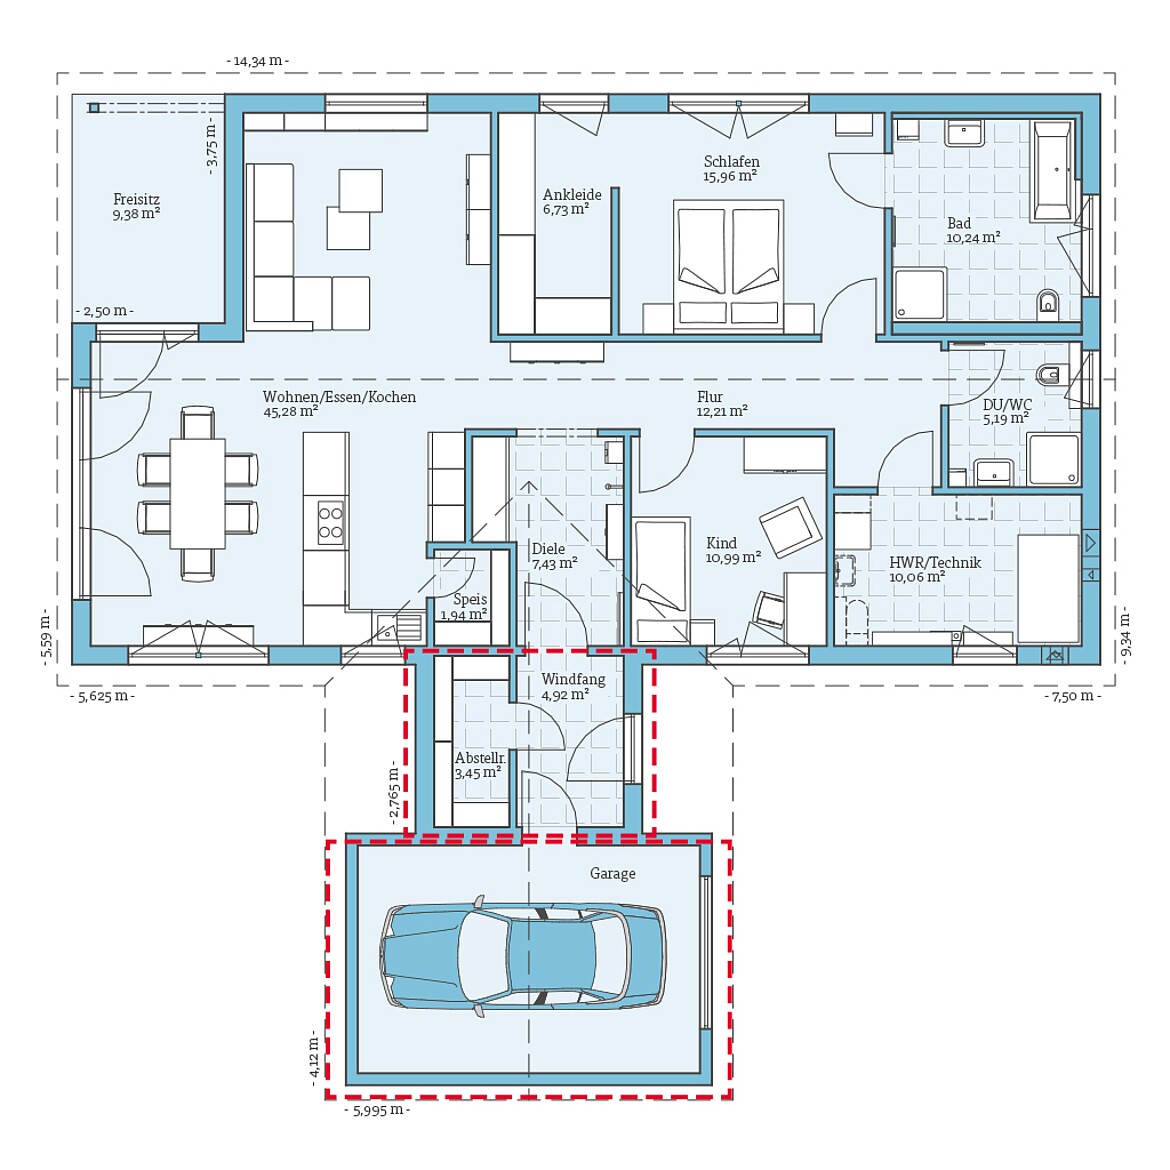 Prefabricated house Bungalow 127: Ground floor plan